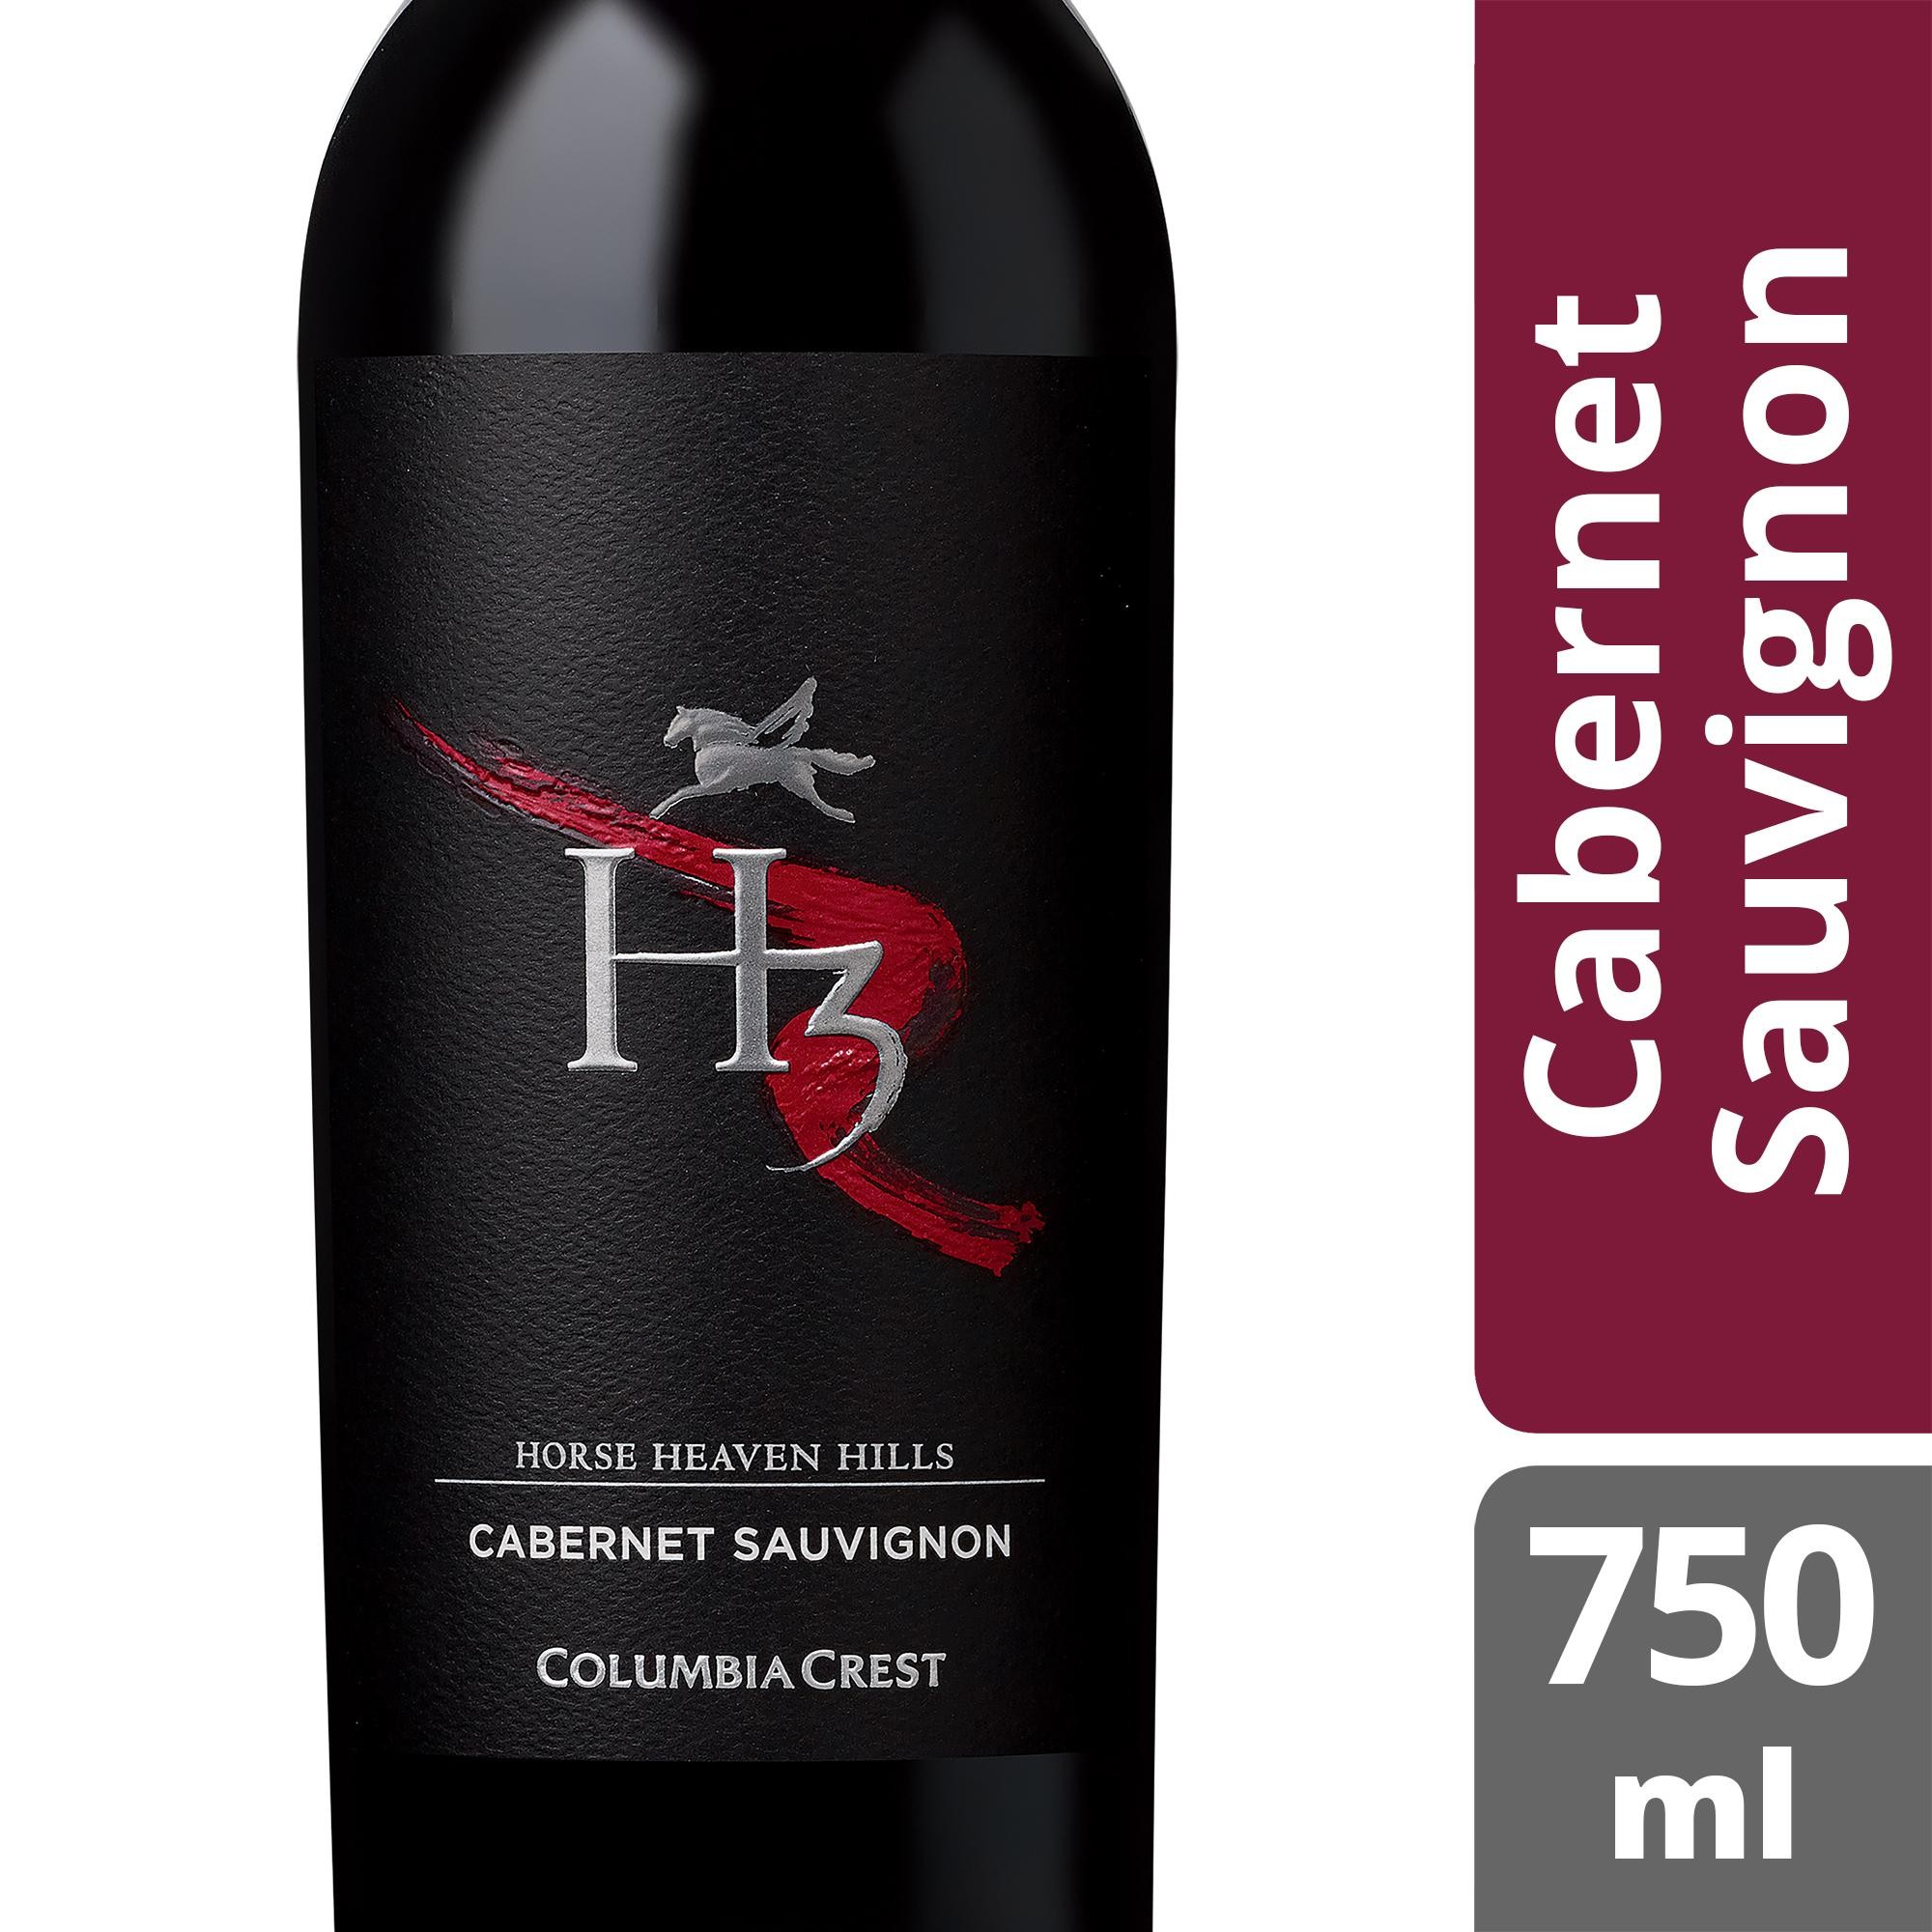 Columbia Crest H3 Cabernet Sauvignon 2020 Red Wine - Washington